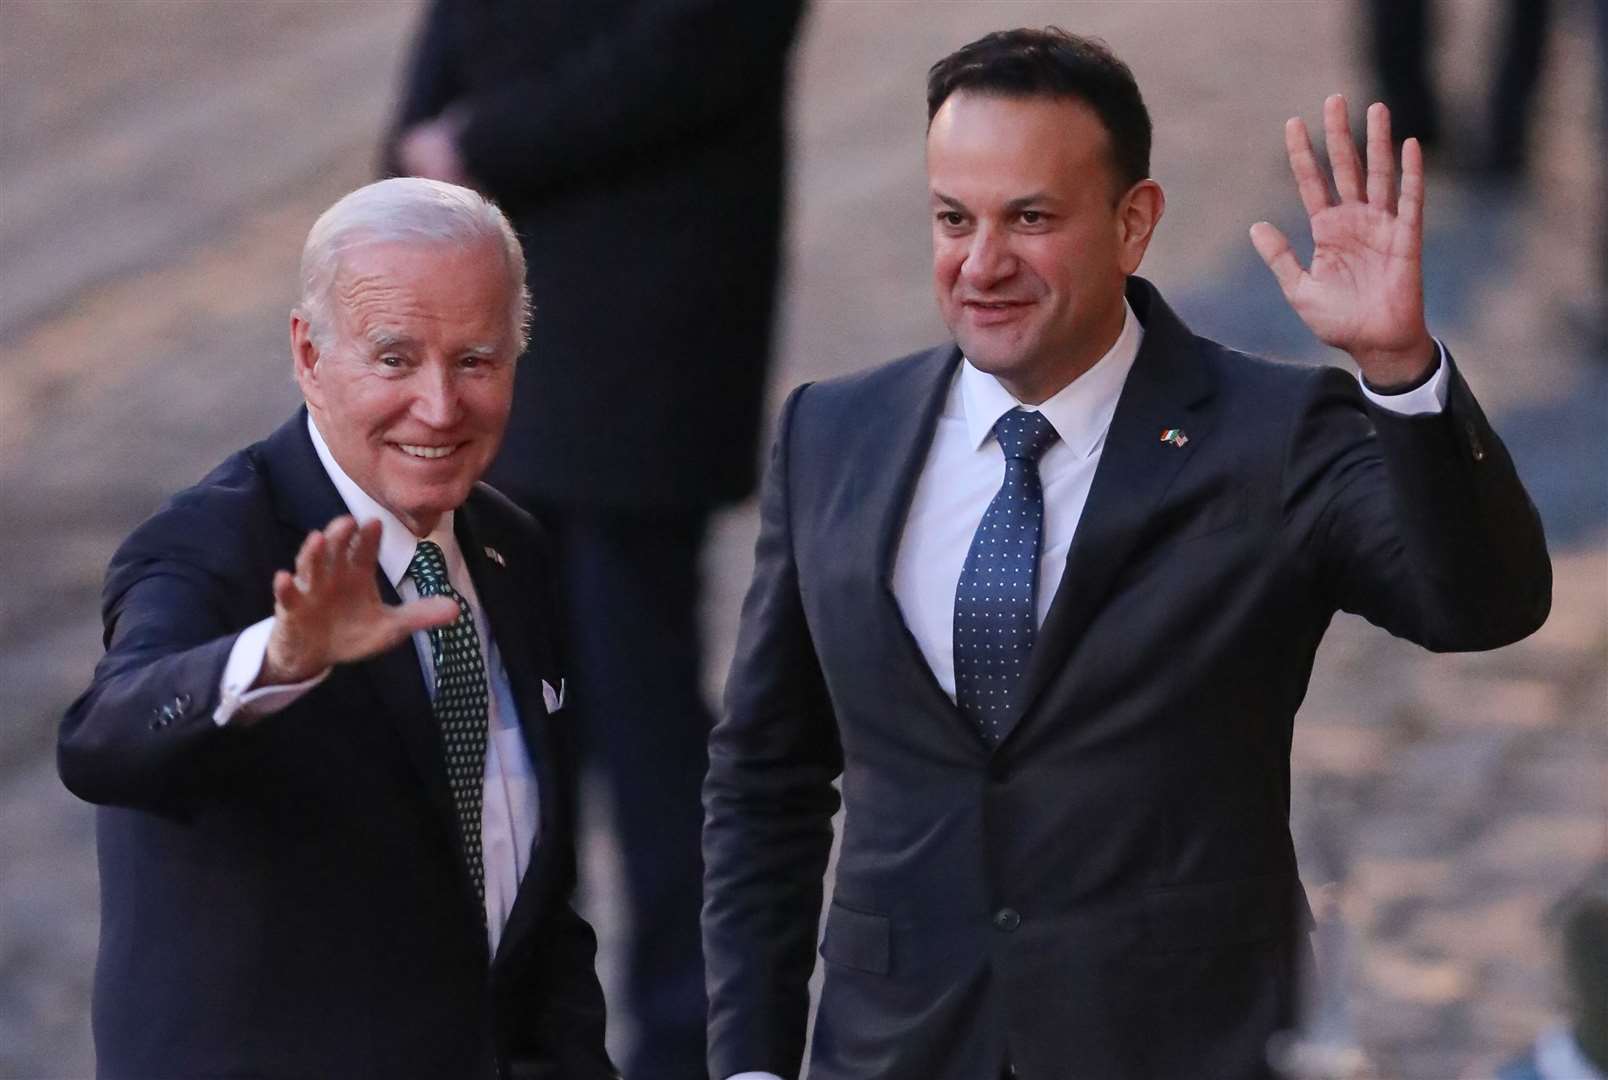 US President Joe Biden (left) is greeted by Taoiseach Leo Varadkar in Ireland last year (PA)